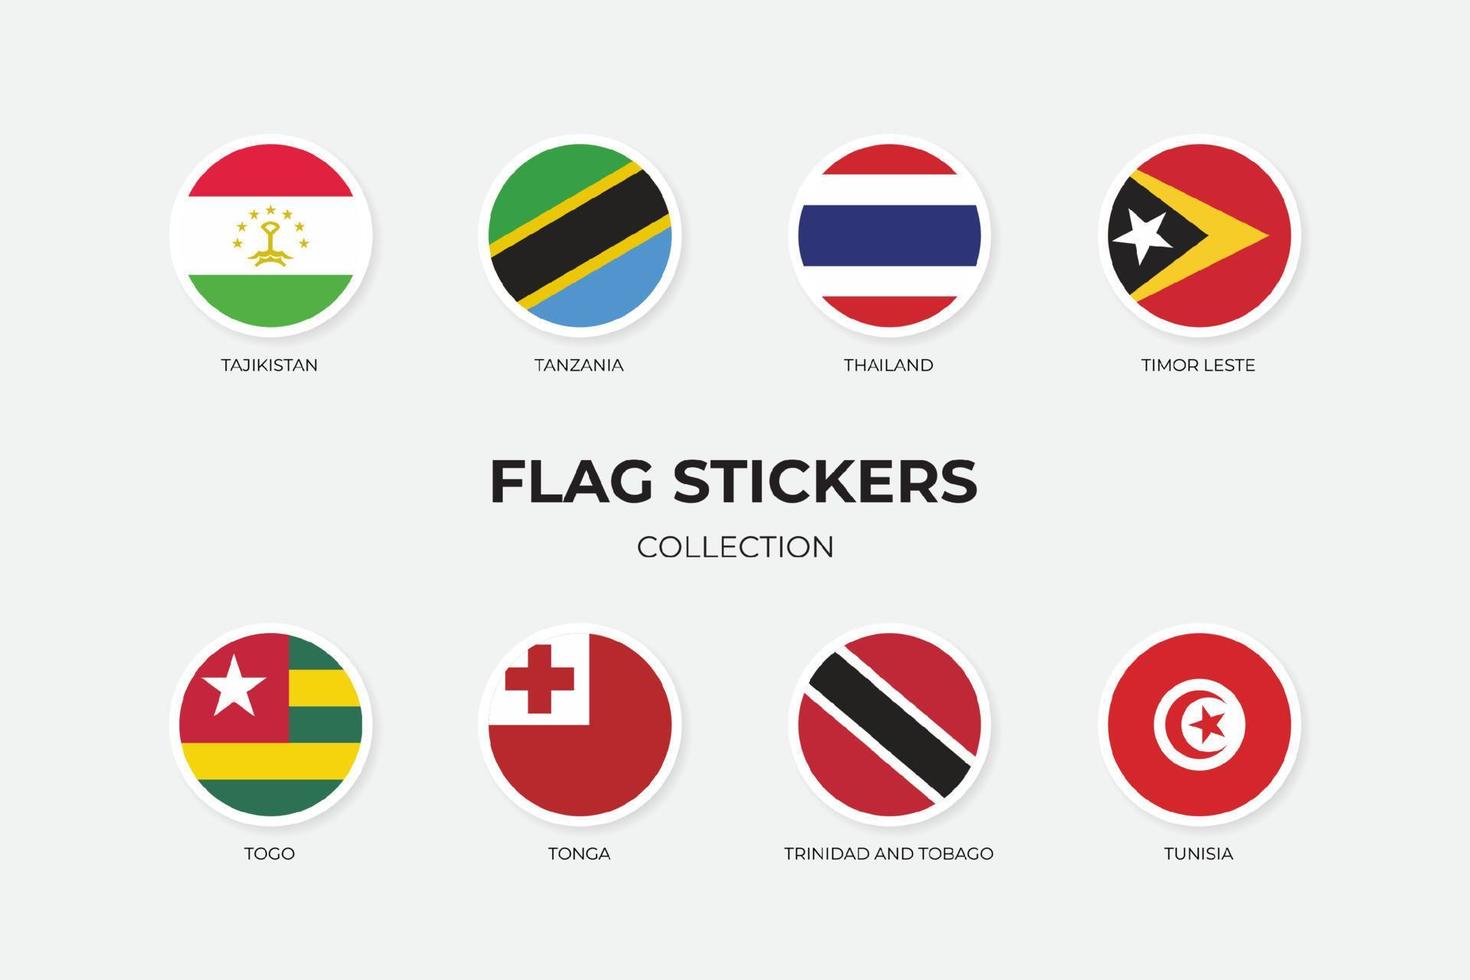 bandiere adesive del tagikistan, tanzania, tailandia, timor est, togo, tonga, trinidad e tobago, tunisia vettore